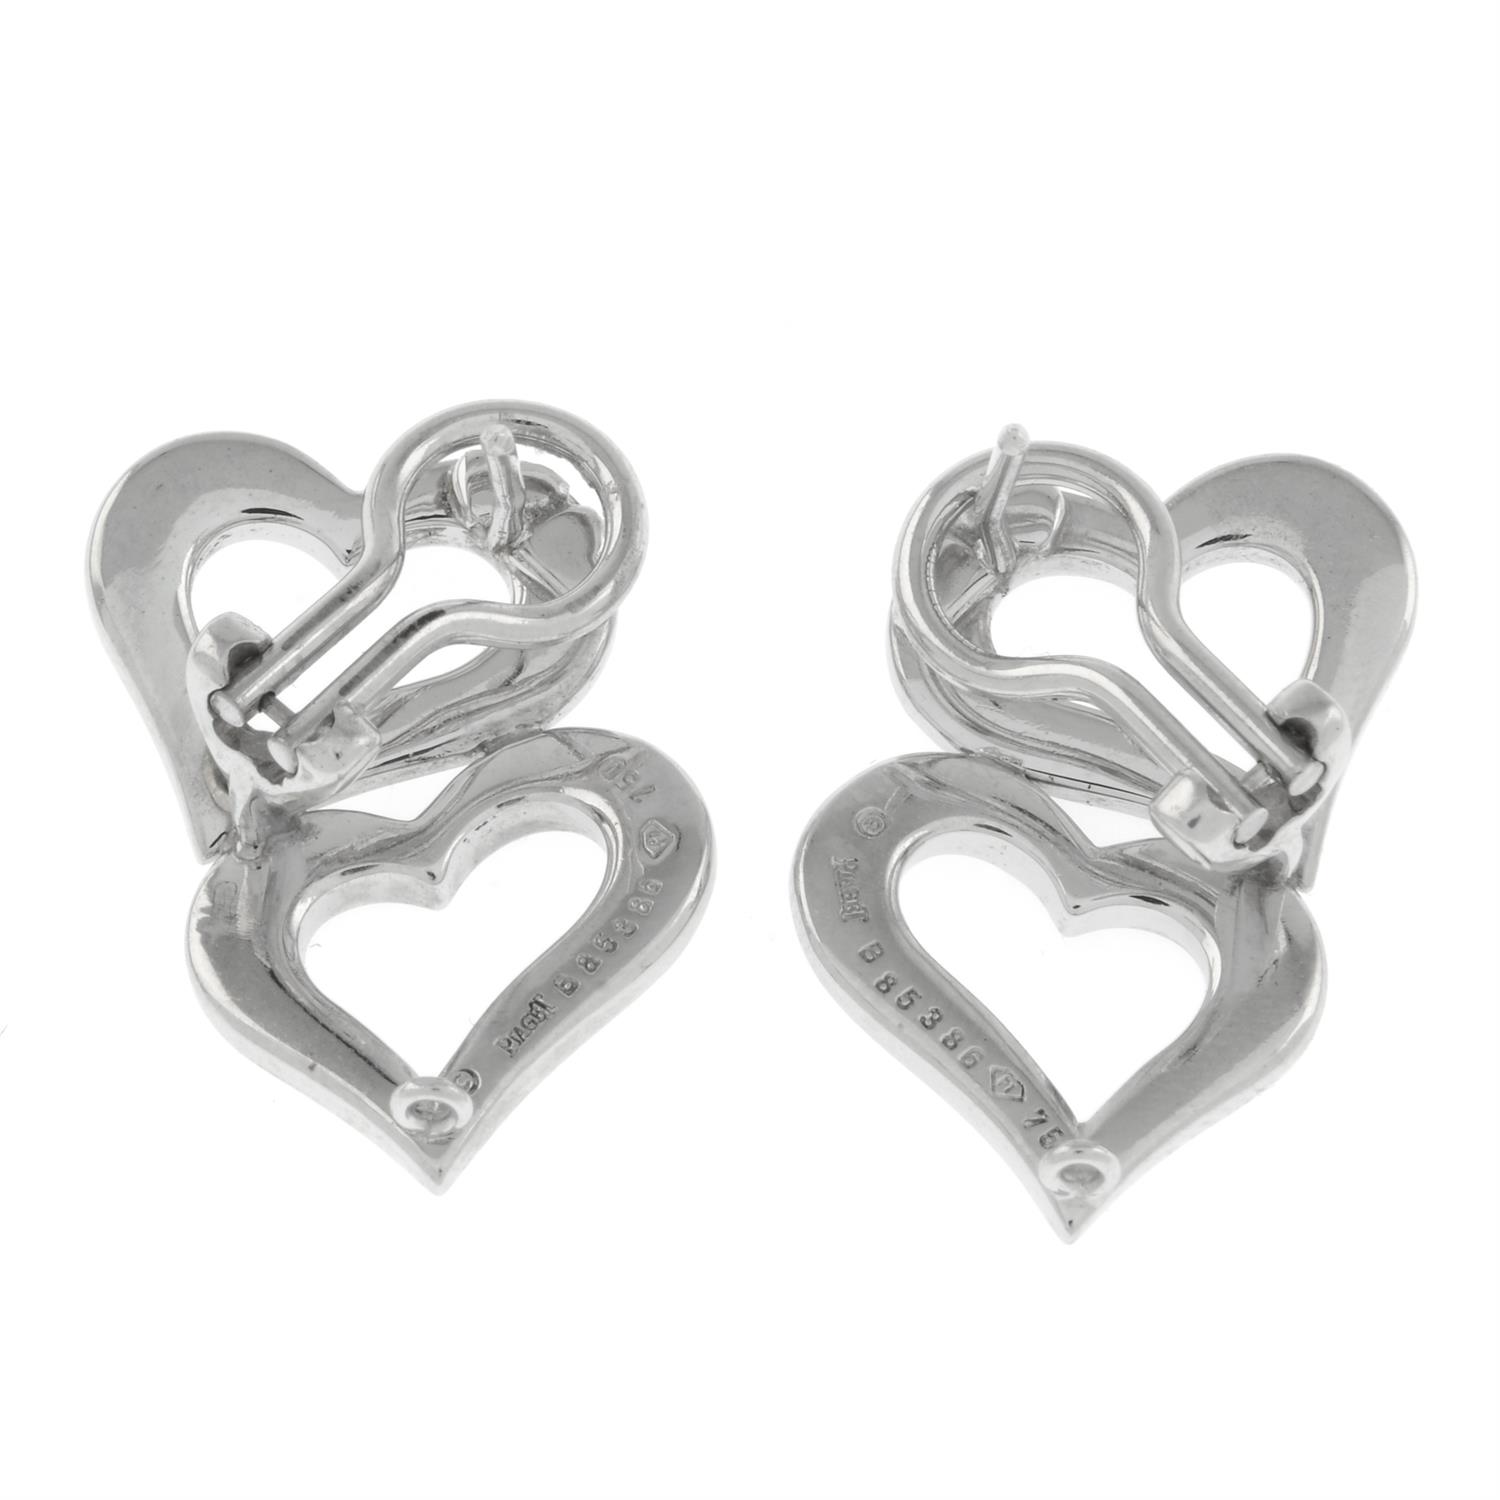 Diamond heart earrings, by Piaget - Image 3 of 3